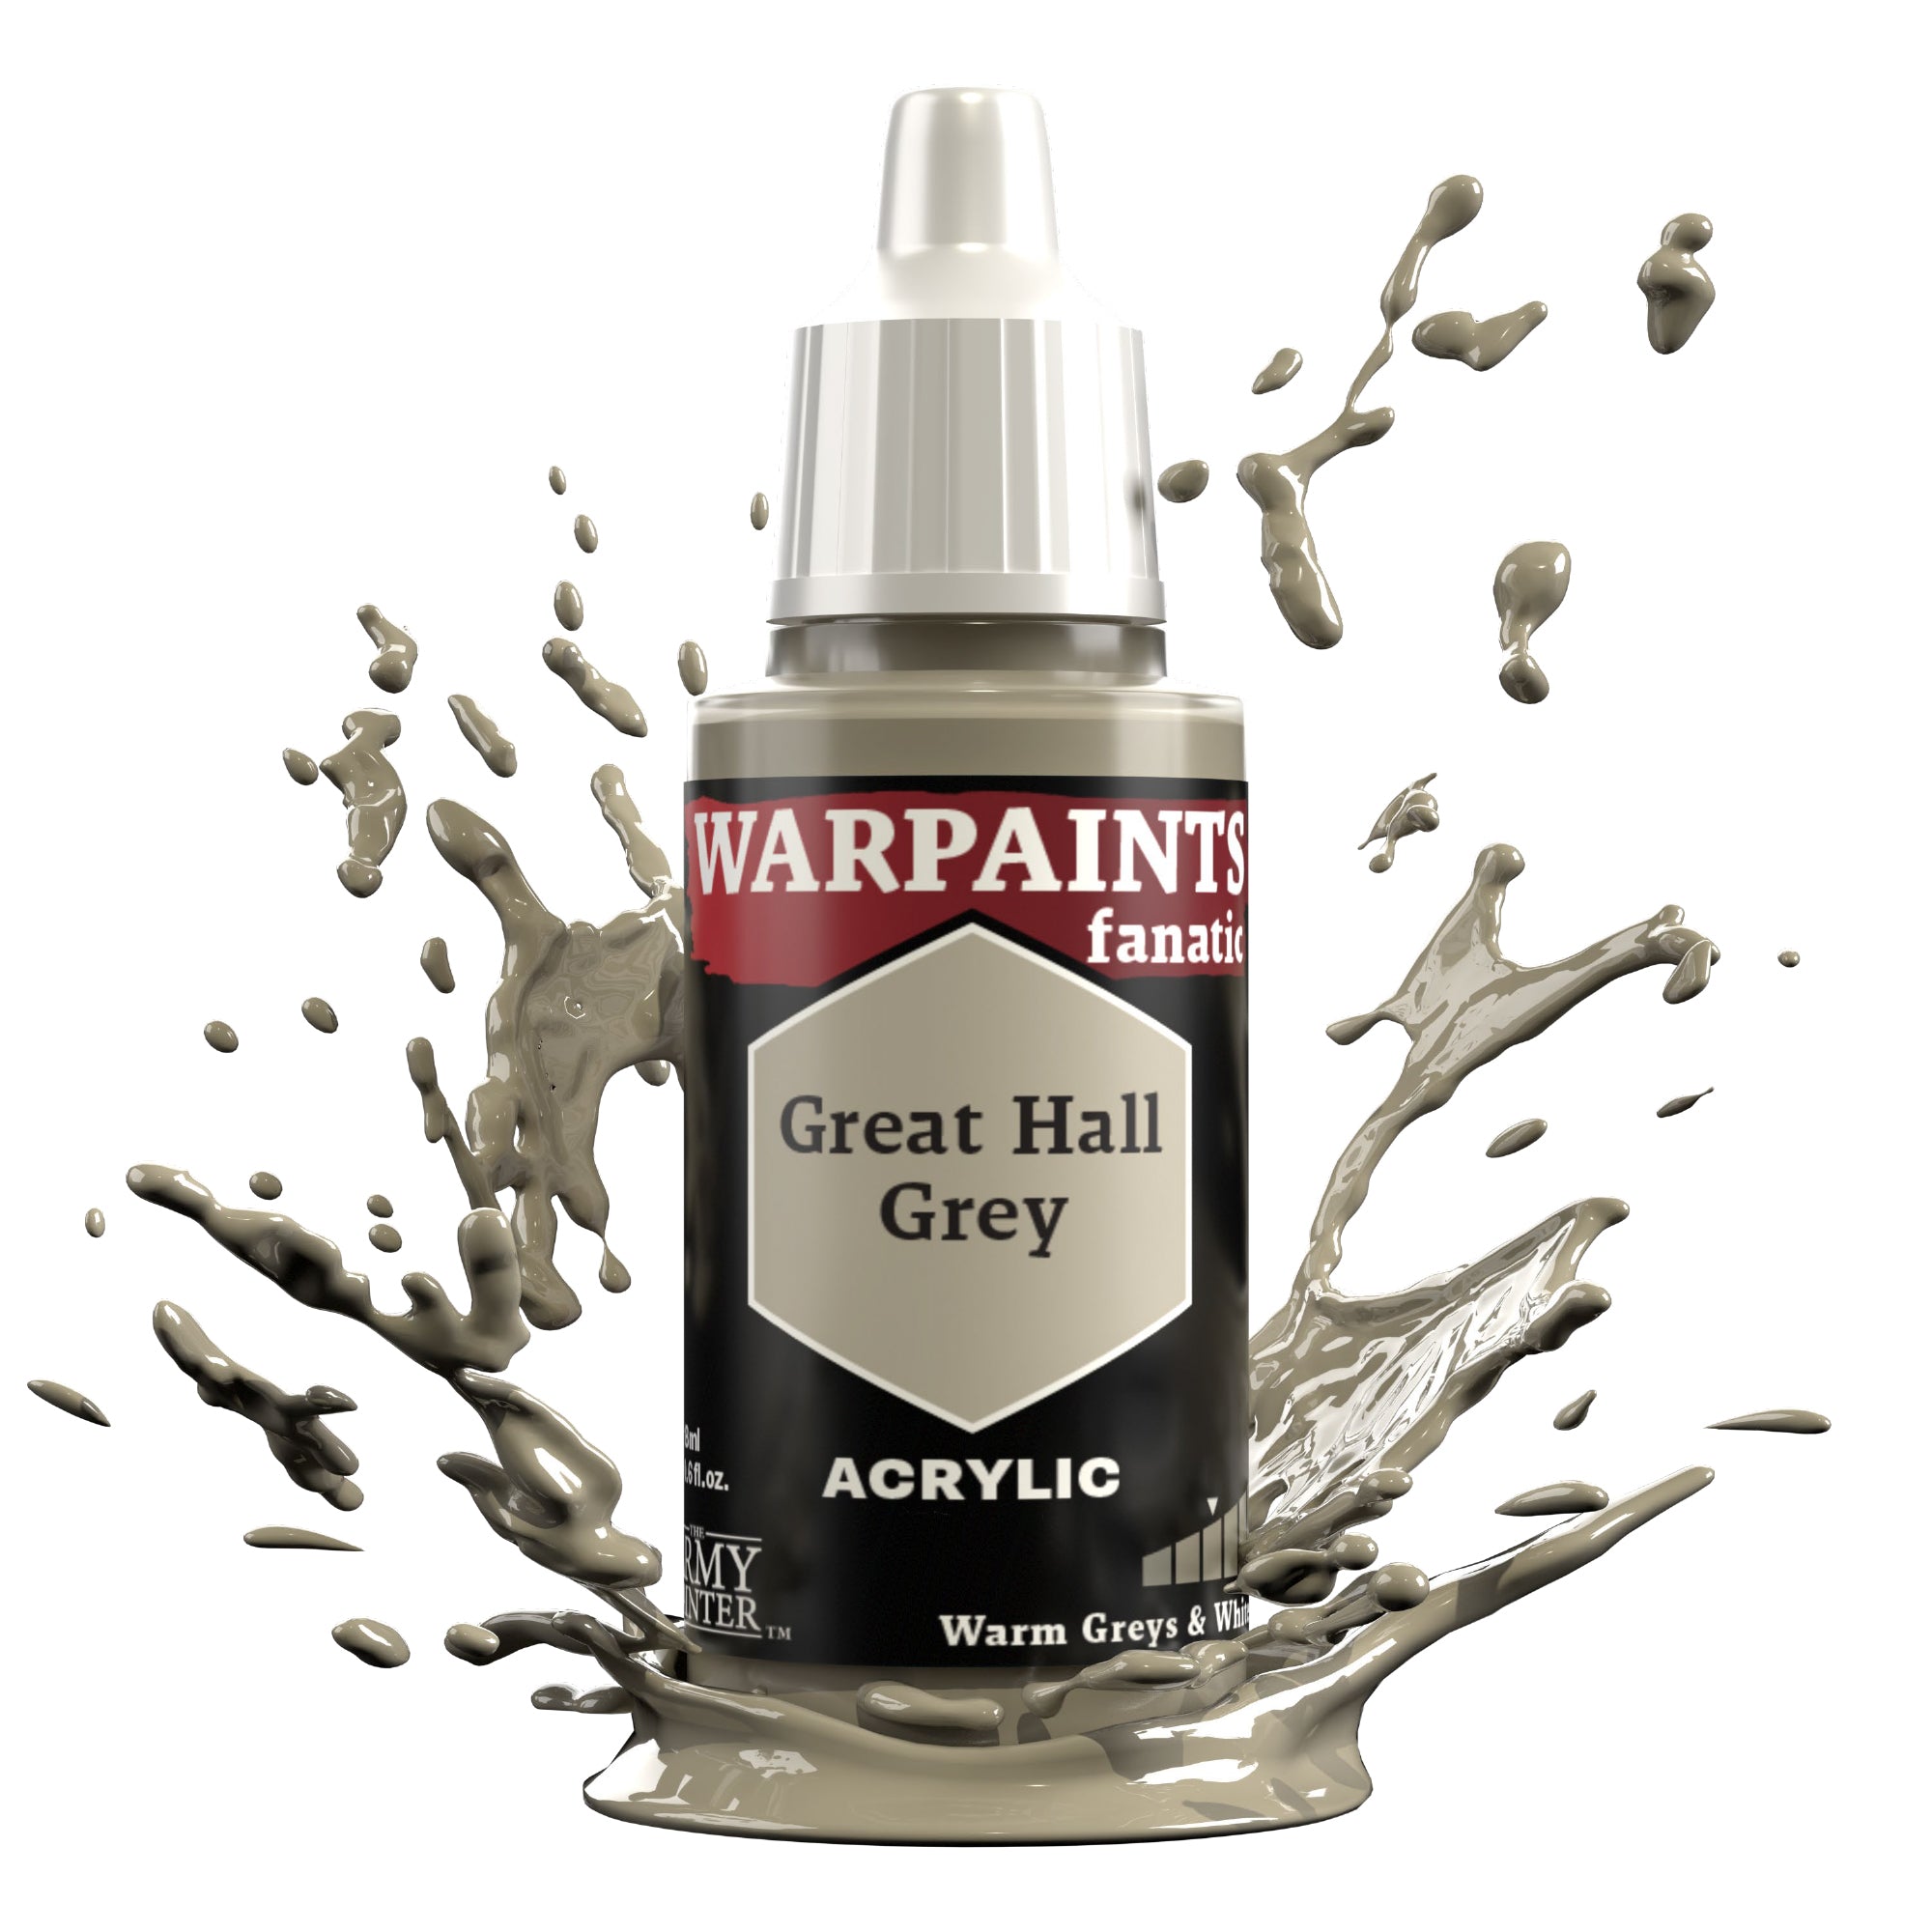 Warpaint Fanatics: Great Hall Grey